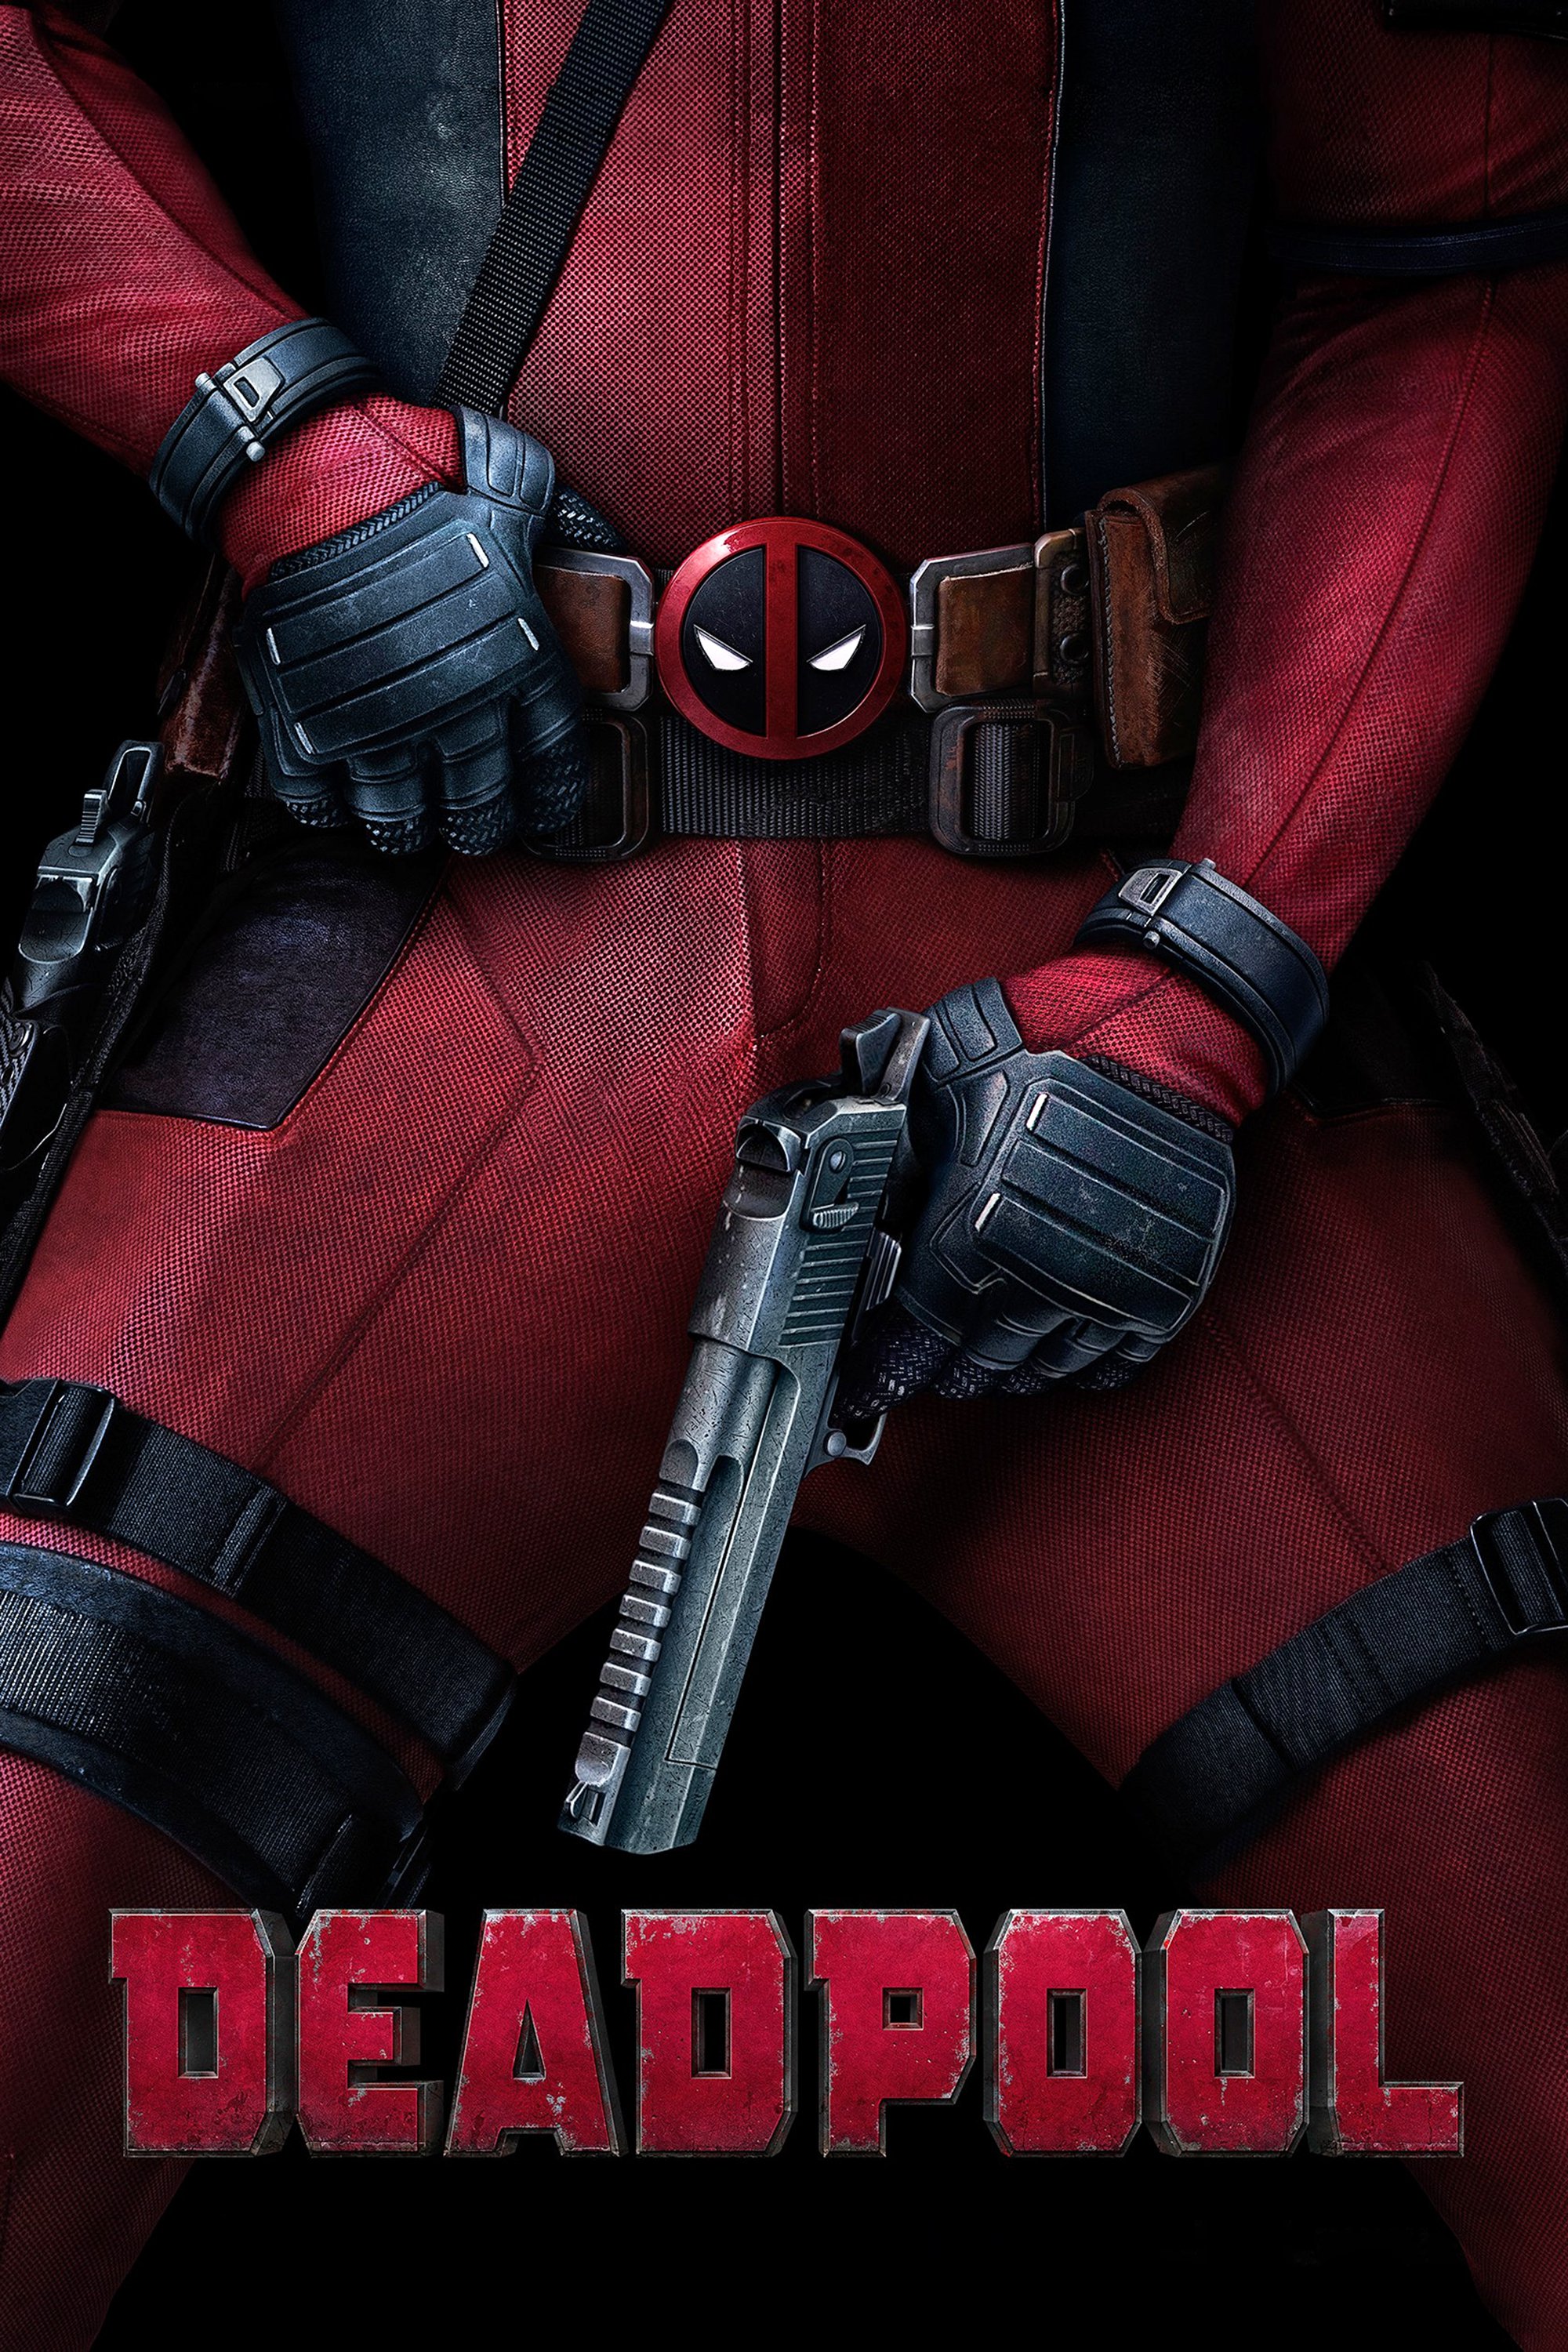 Plakat dla "Deadpool"